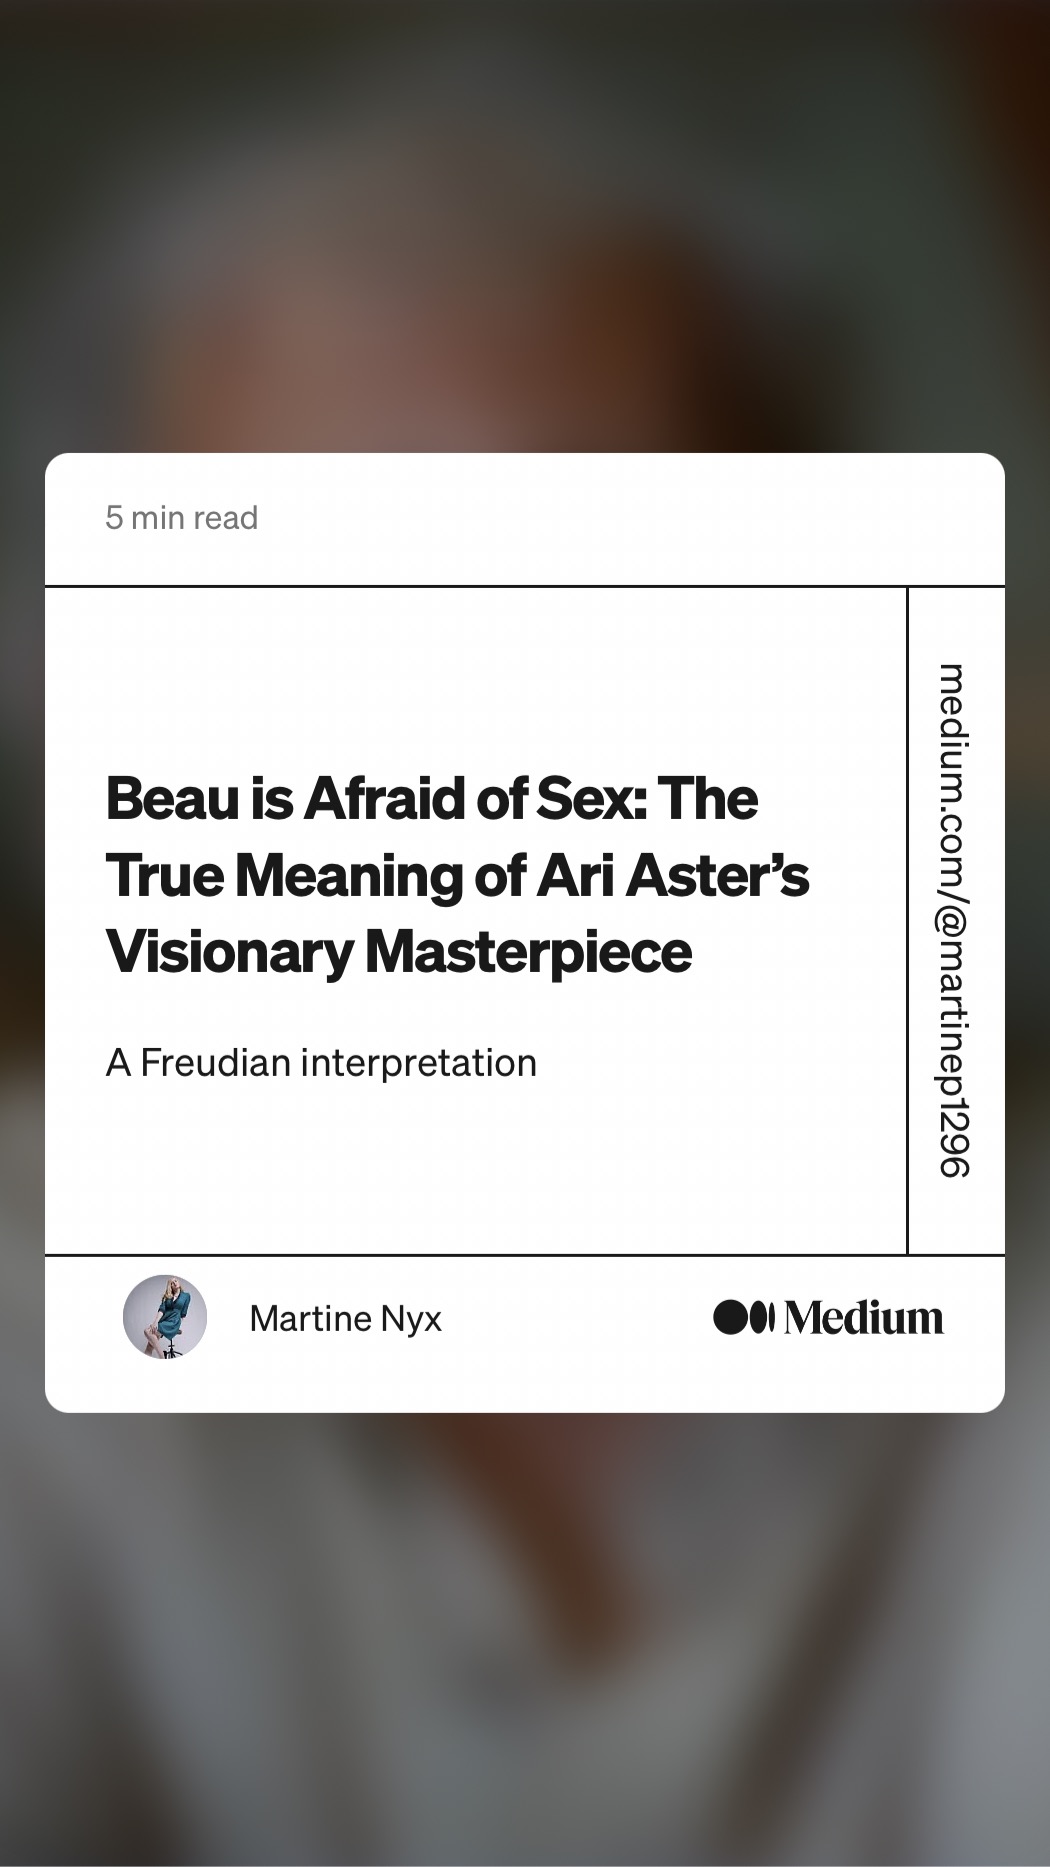 Beau is Afraid of Sex: The
True Meaning of Ari Aster’s
Visionary Masterpiece

A Freudian interpretation

96gLdauIRW®/WOo WNipaw

&amp; Martine Nyx @0 Medium